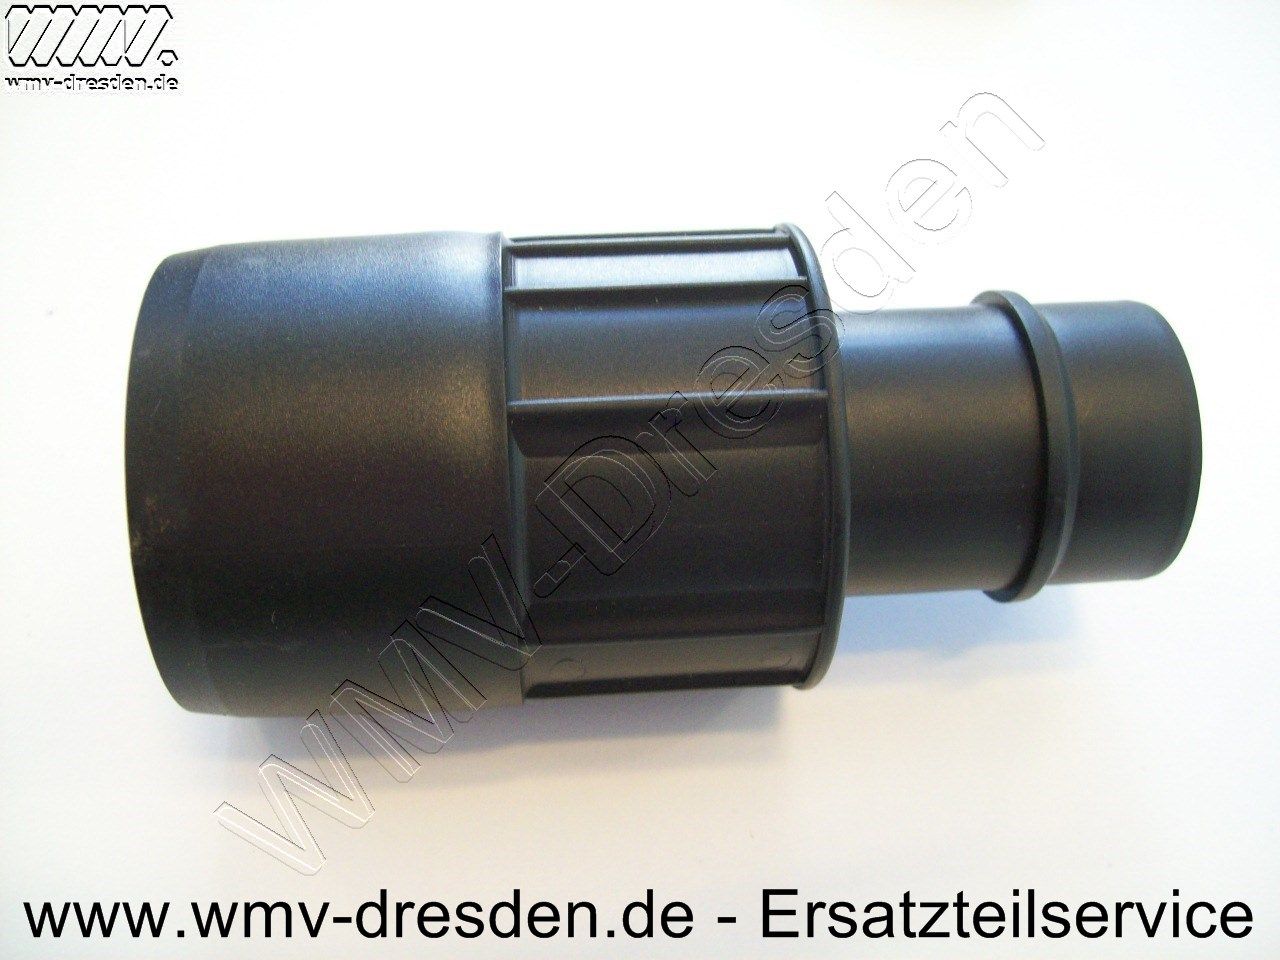 Artikel 1609390580-B17 Hersteller: Bosch-Skil-Dremel 